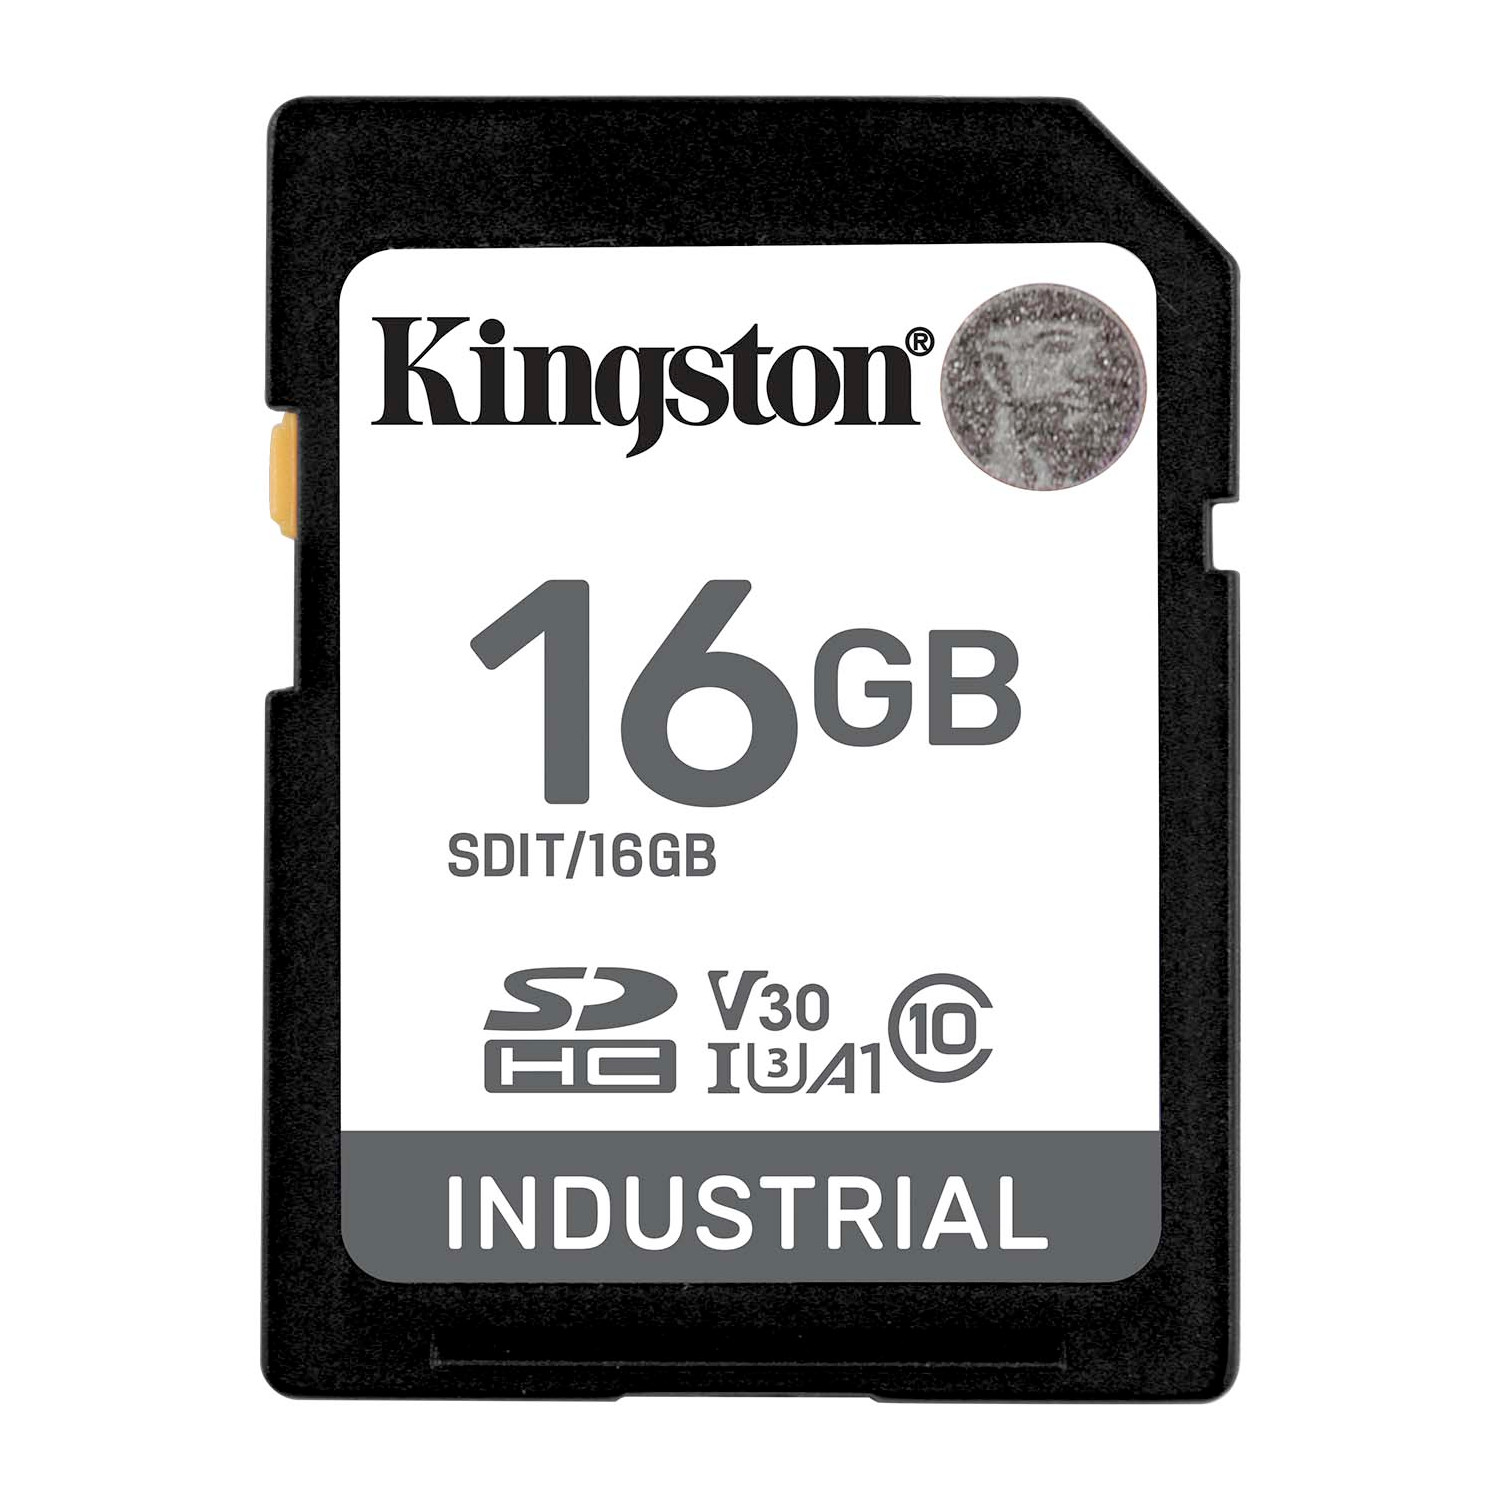 Kingston - SDIT-16GB -   